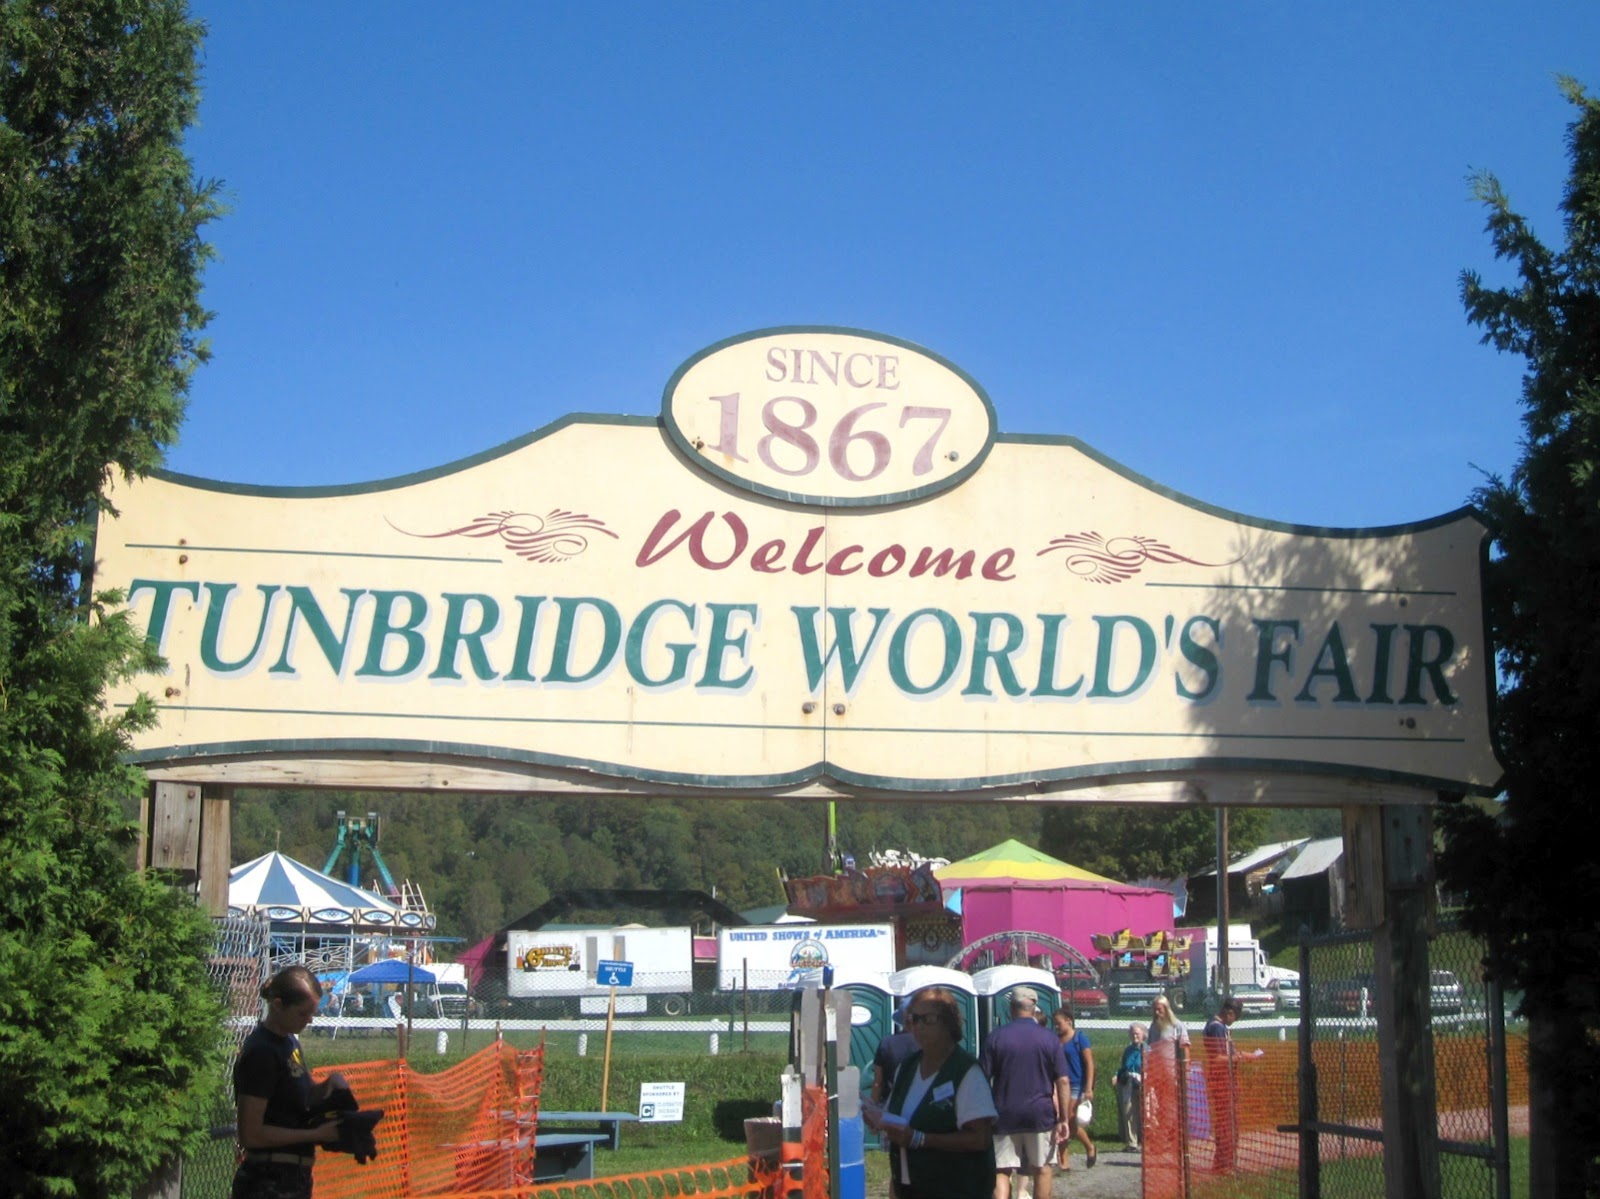 the hawkins family Tunbridge World's Fair